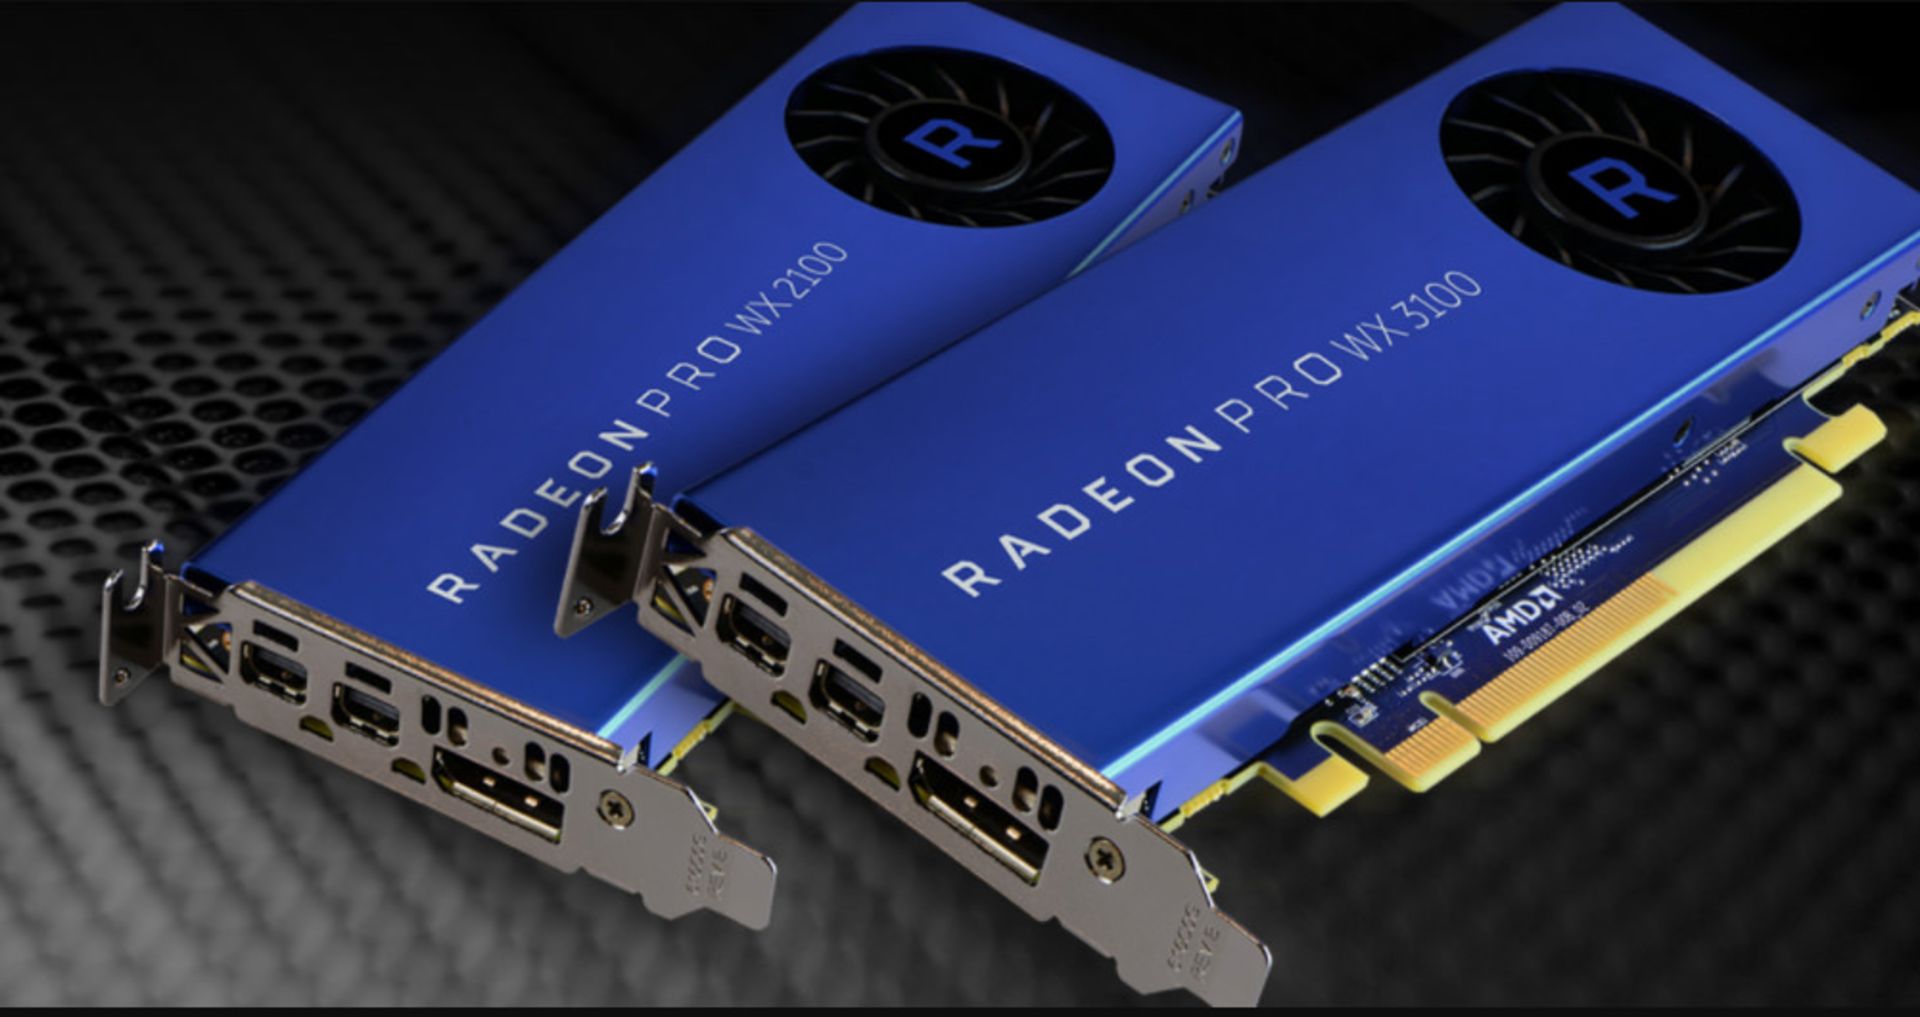 AMD Radeon Pro WX / کارت گرافیک مخصوص ورک استیشن ای ام دی